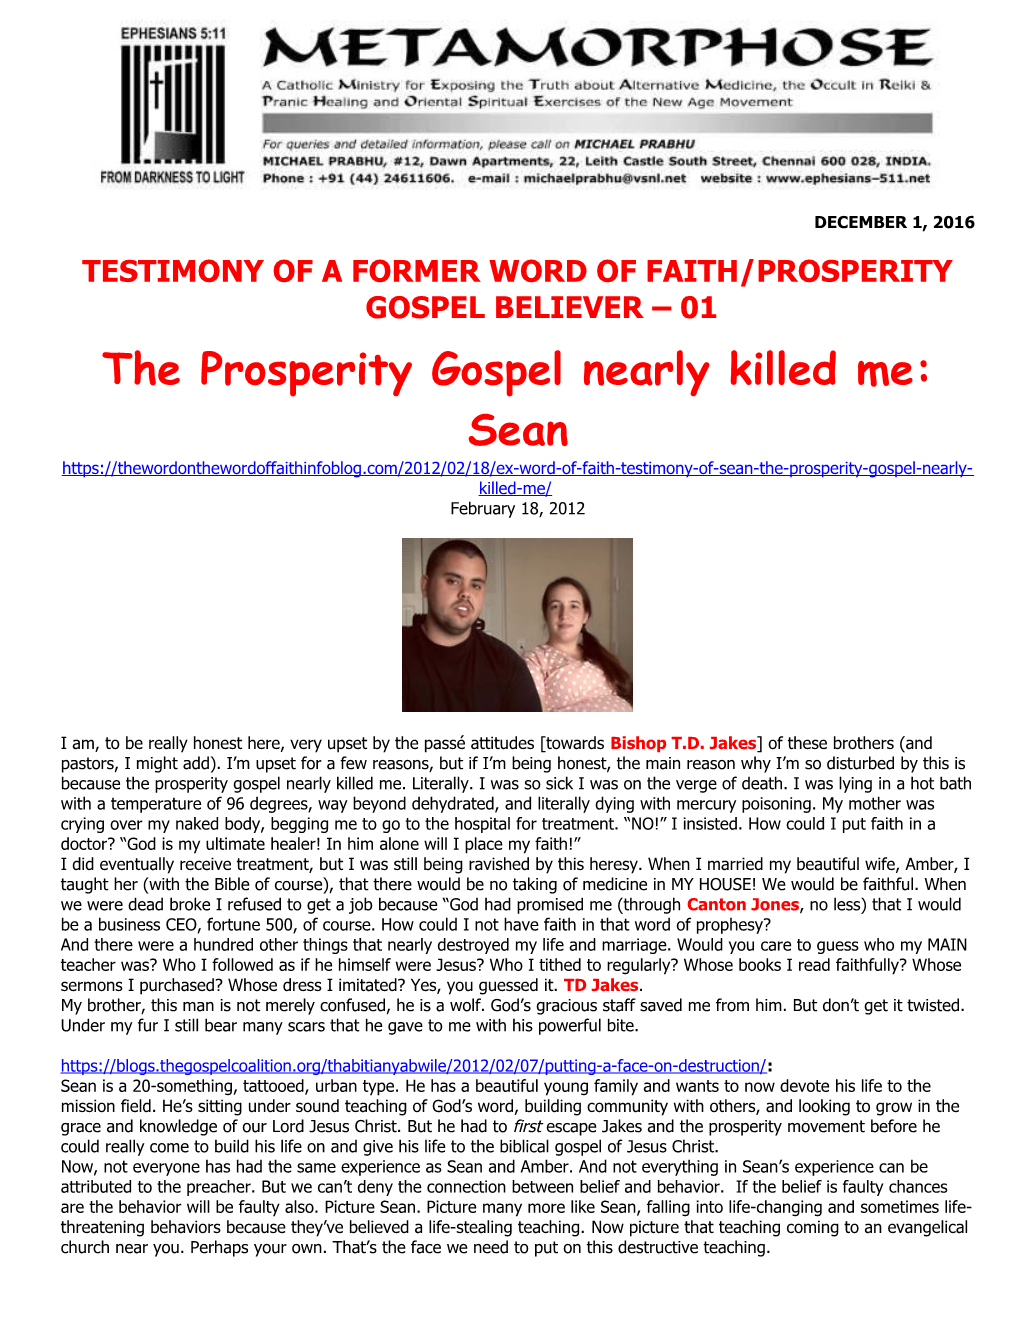 Testimony of a Former Word of Faith/Prosperity Gospel Believer 01